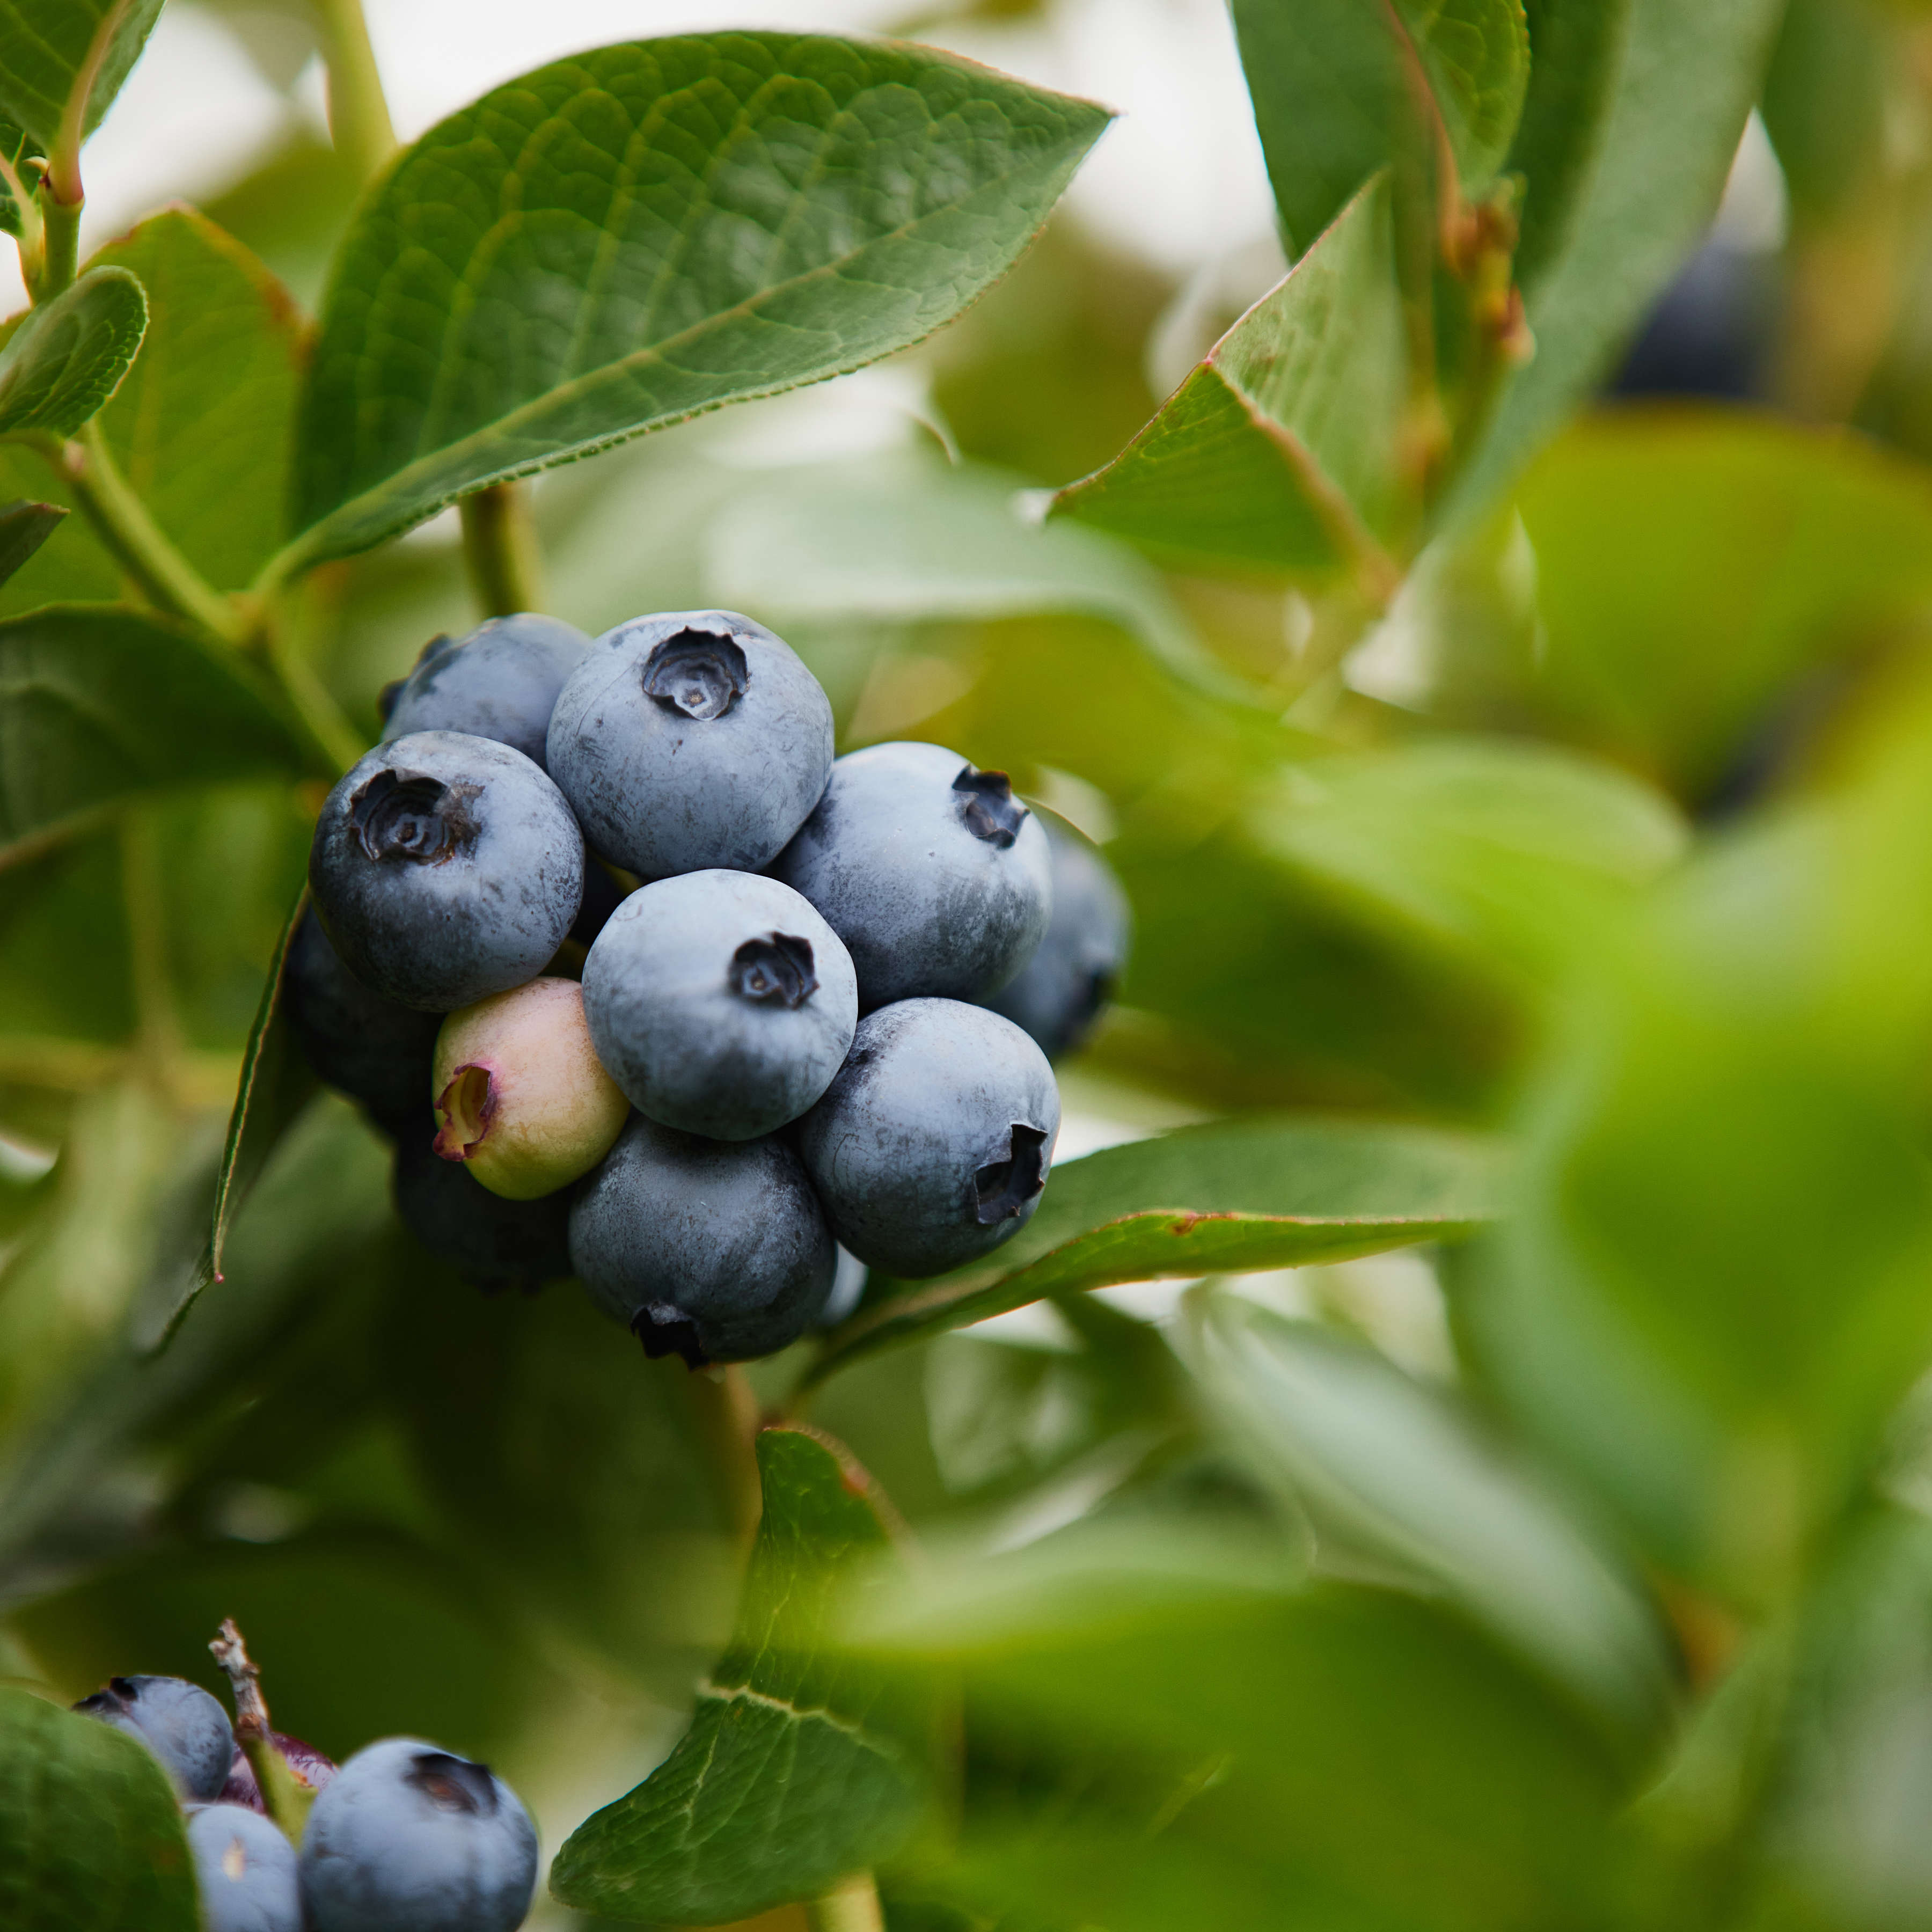 Blueberries on bush, Tassie Blue Blueberries, Southern Tasmania. Photo: Samuel Shelley.